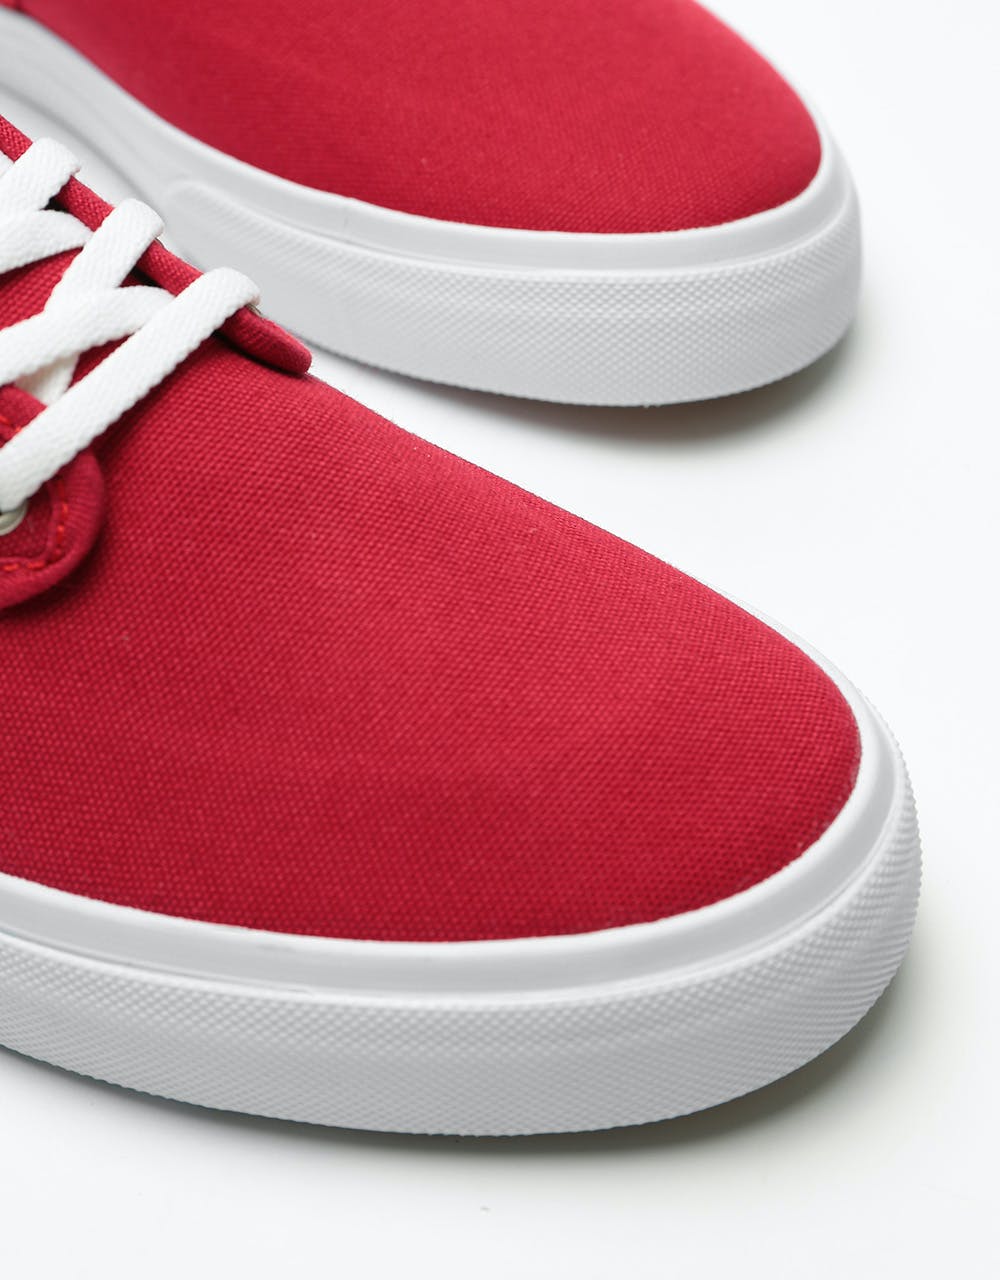 Lakai Oxford Skate Shoes - Red Canvas